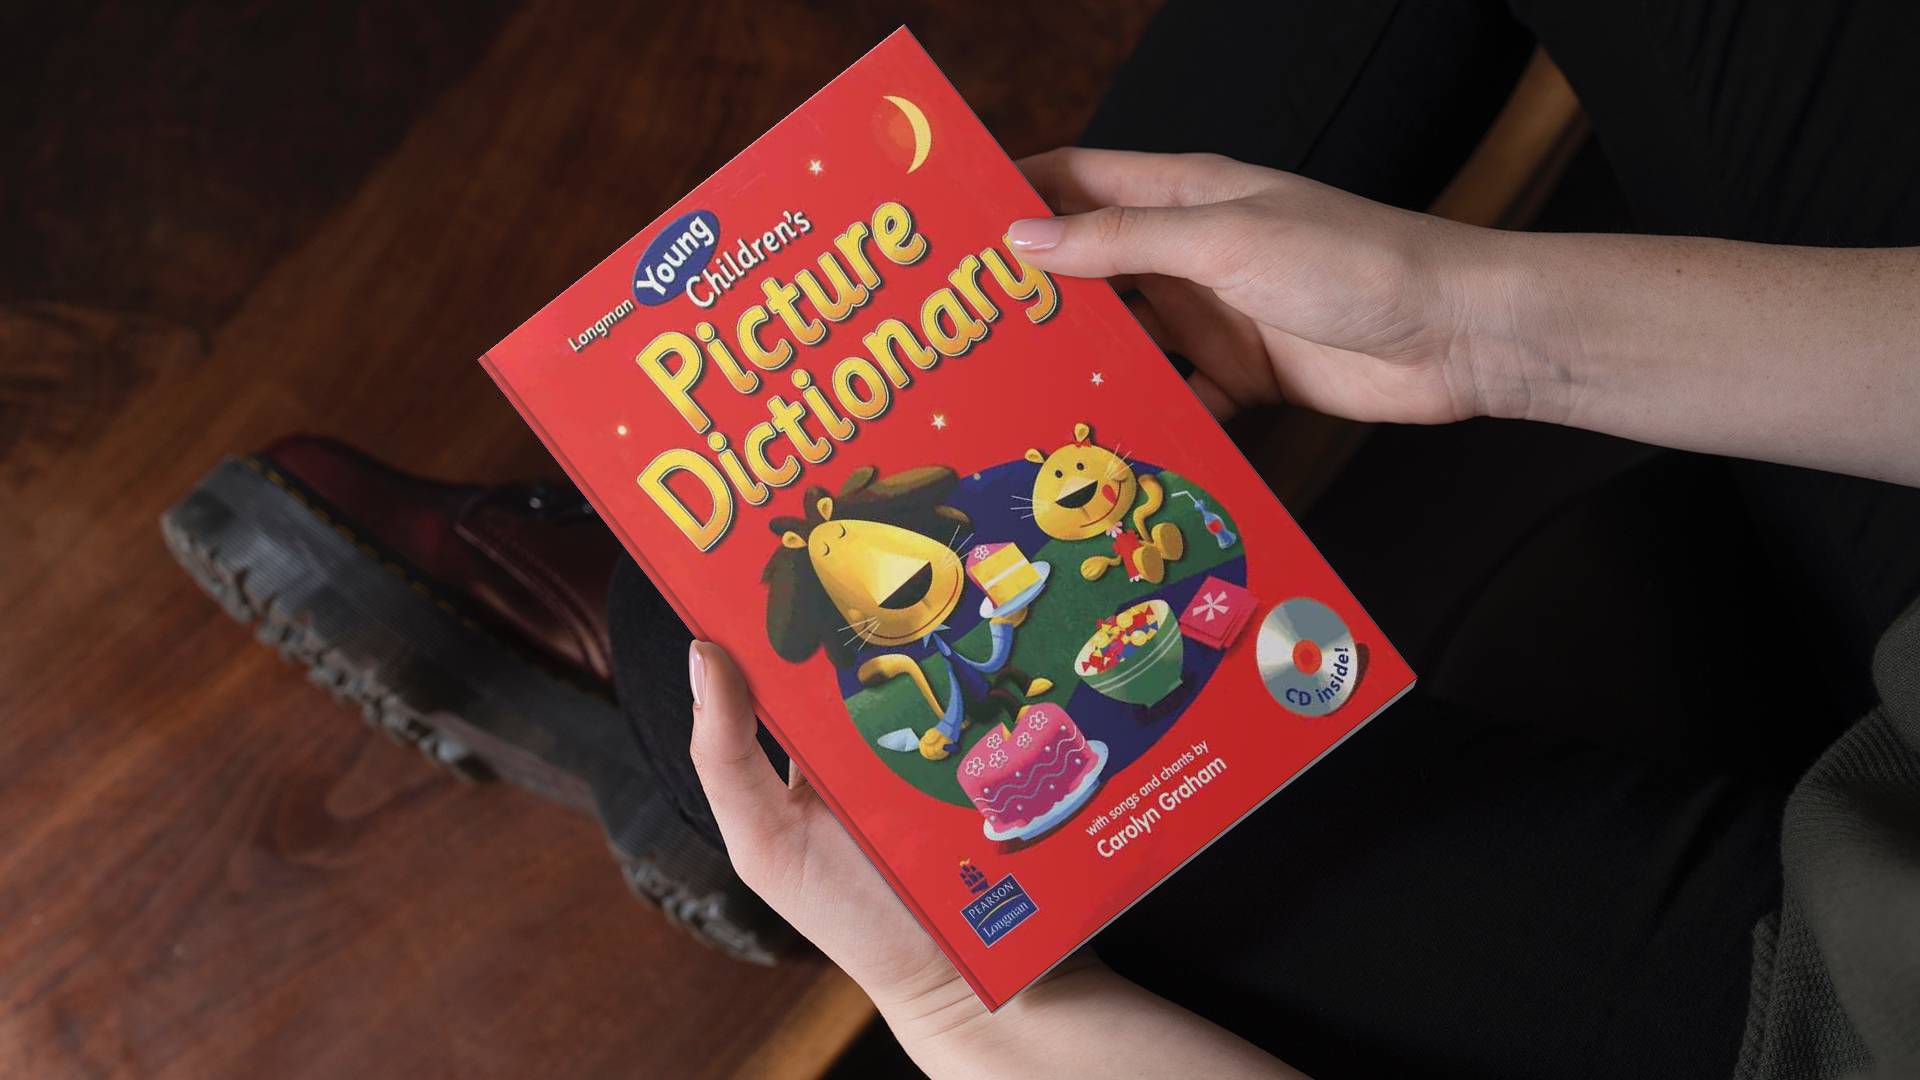 خرید کتاب انگلیسی | فروشگاه اینترنتی کتاب زبان | Longman Young Childrens Picture Dictionary | لانگمن یانگ چیلدرنز پیکچر دیکشنری